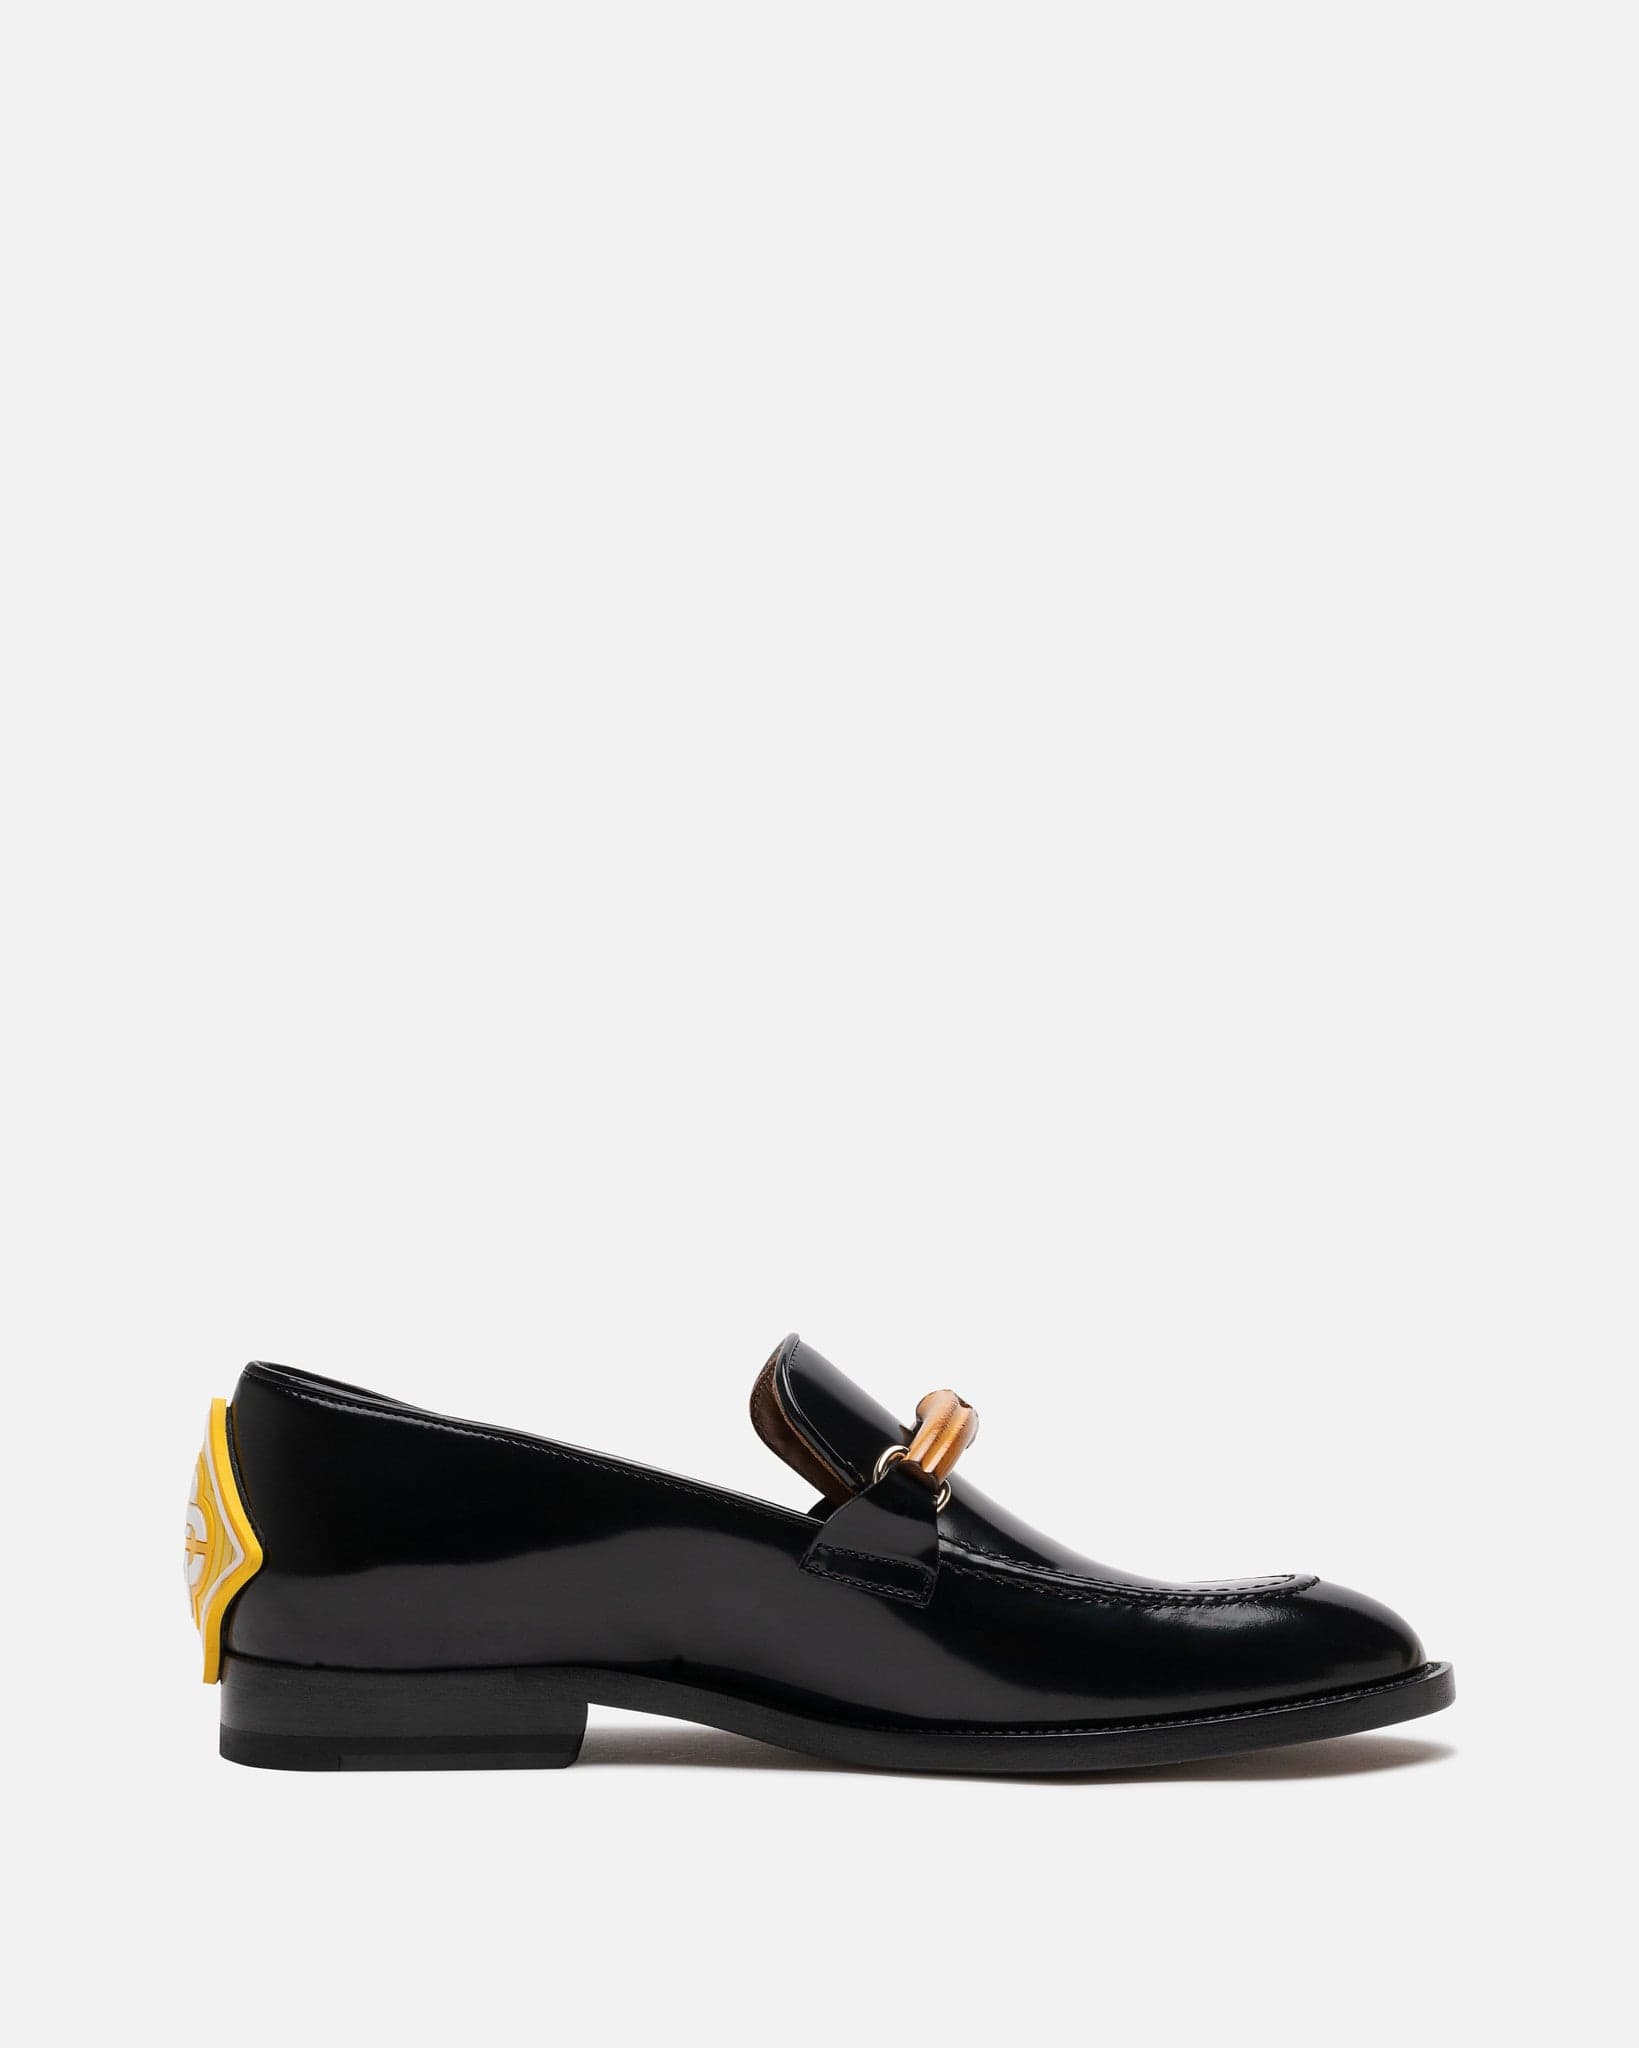 Casablanca Men's Shoes Block Color Loafer in Black/Yellow